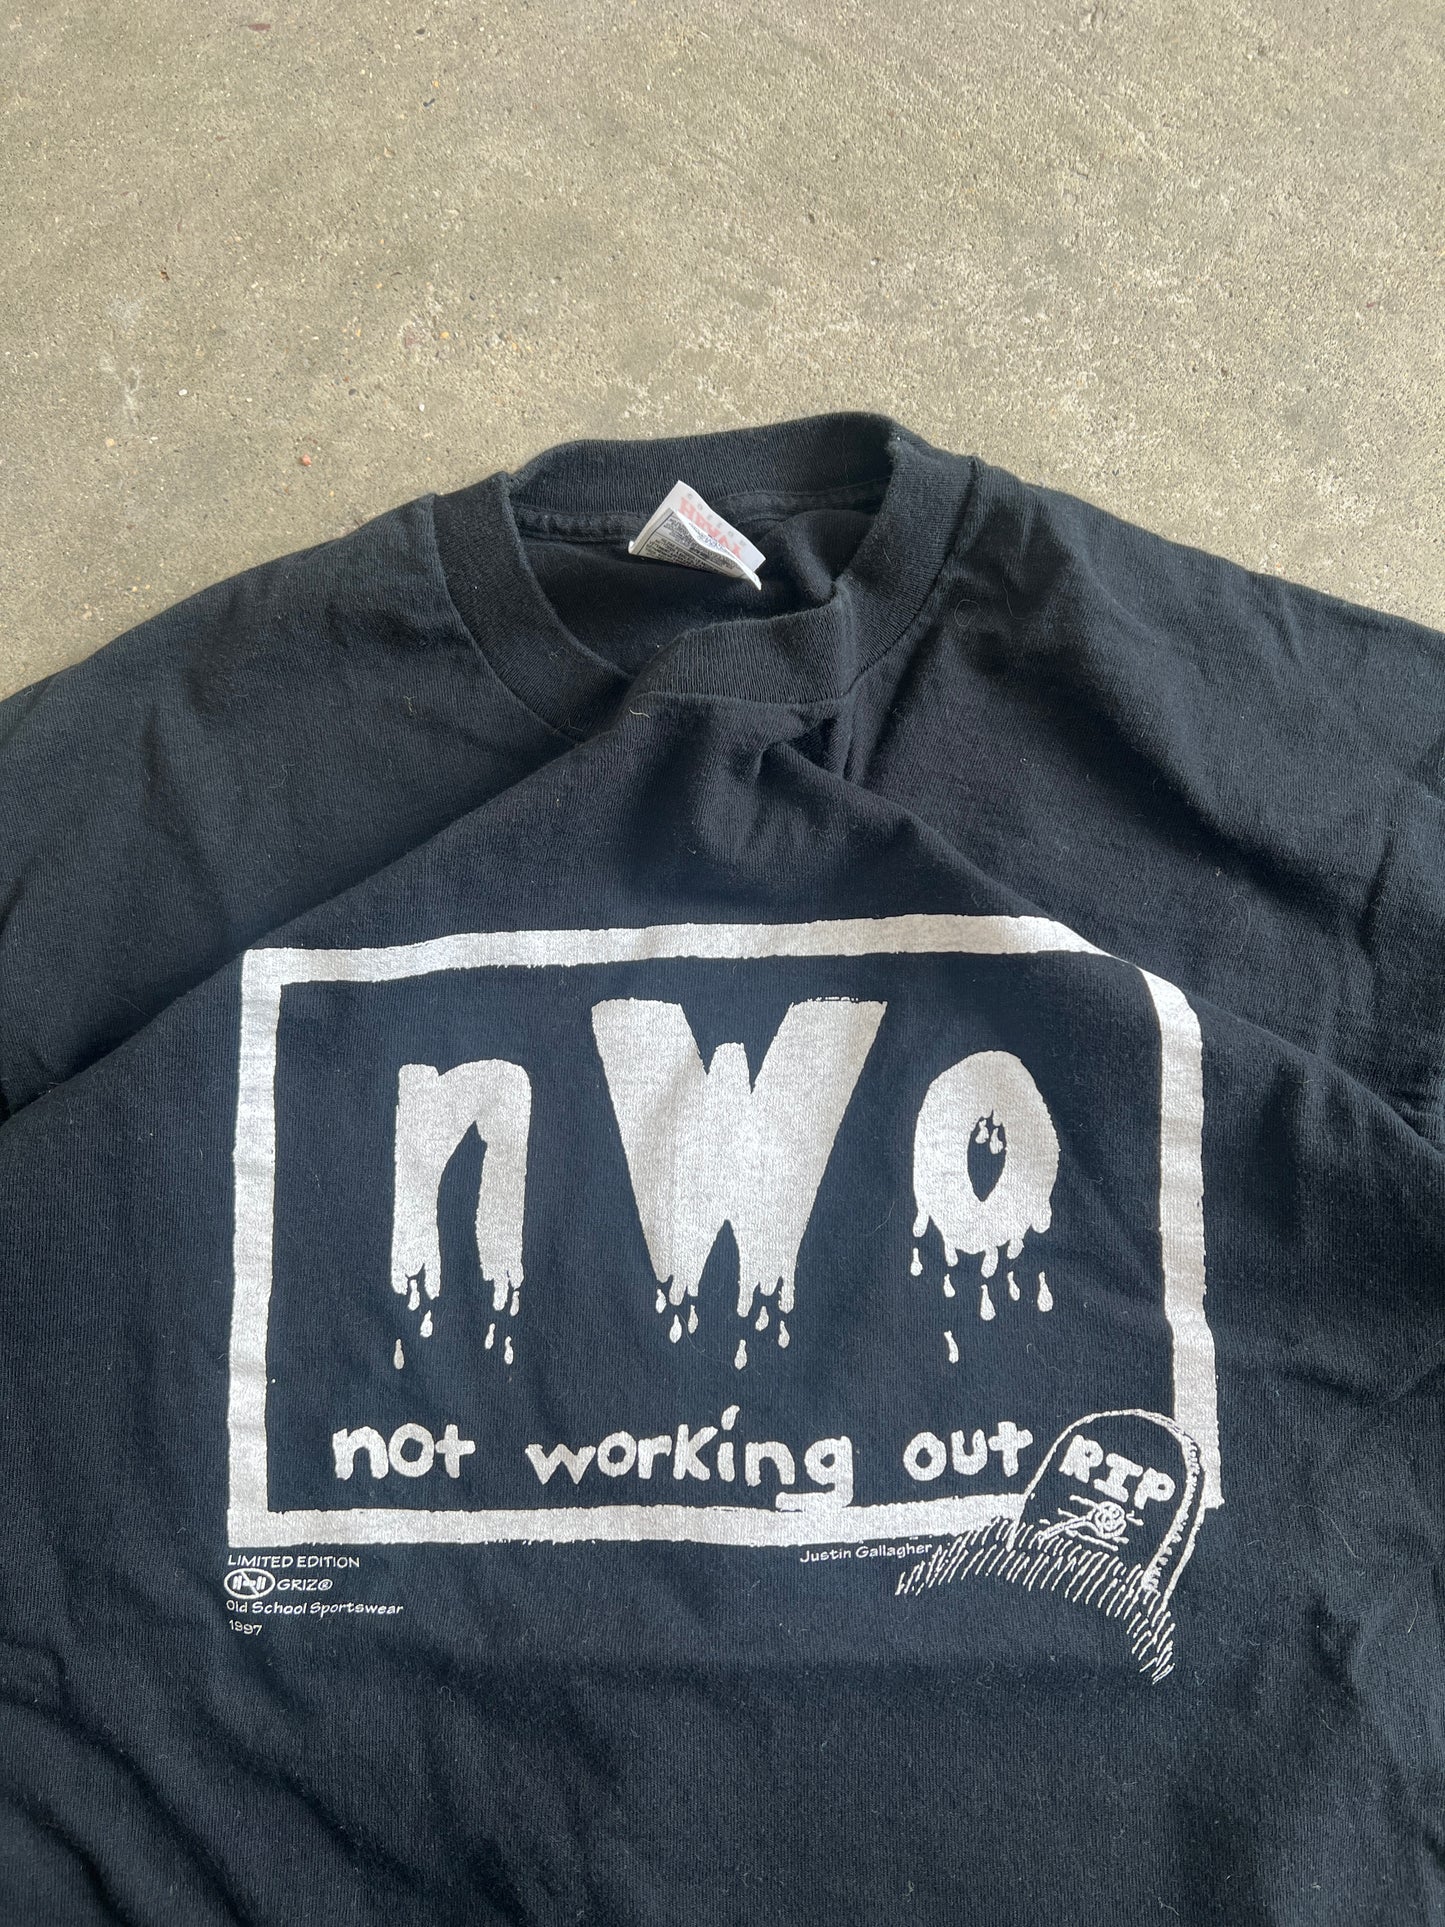 Vintage NWO Wrestling Shirt - XL